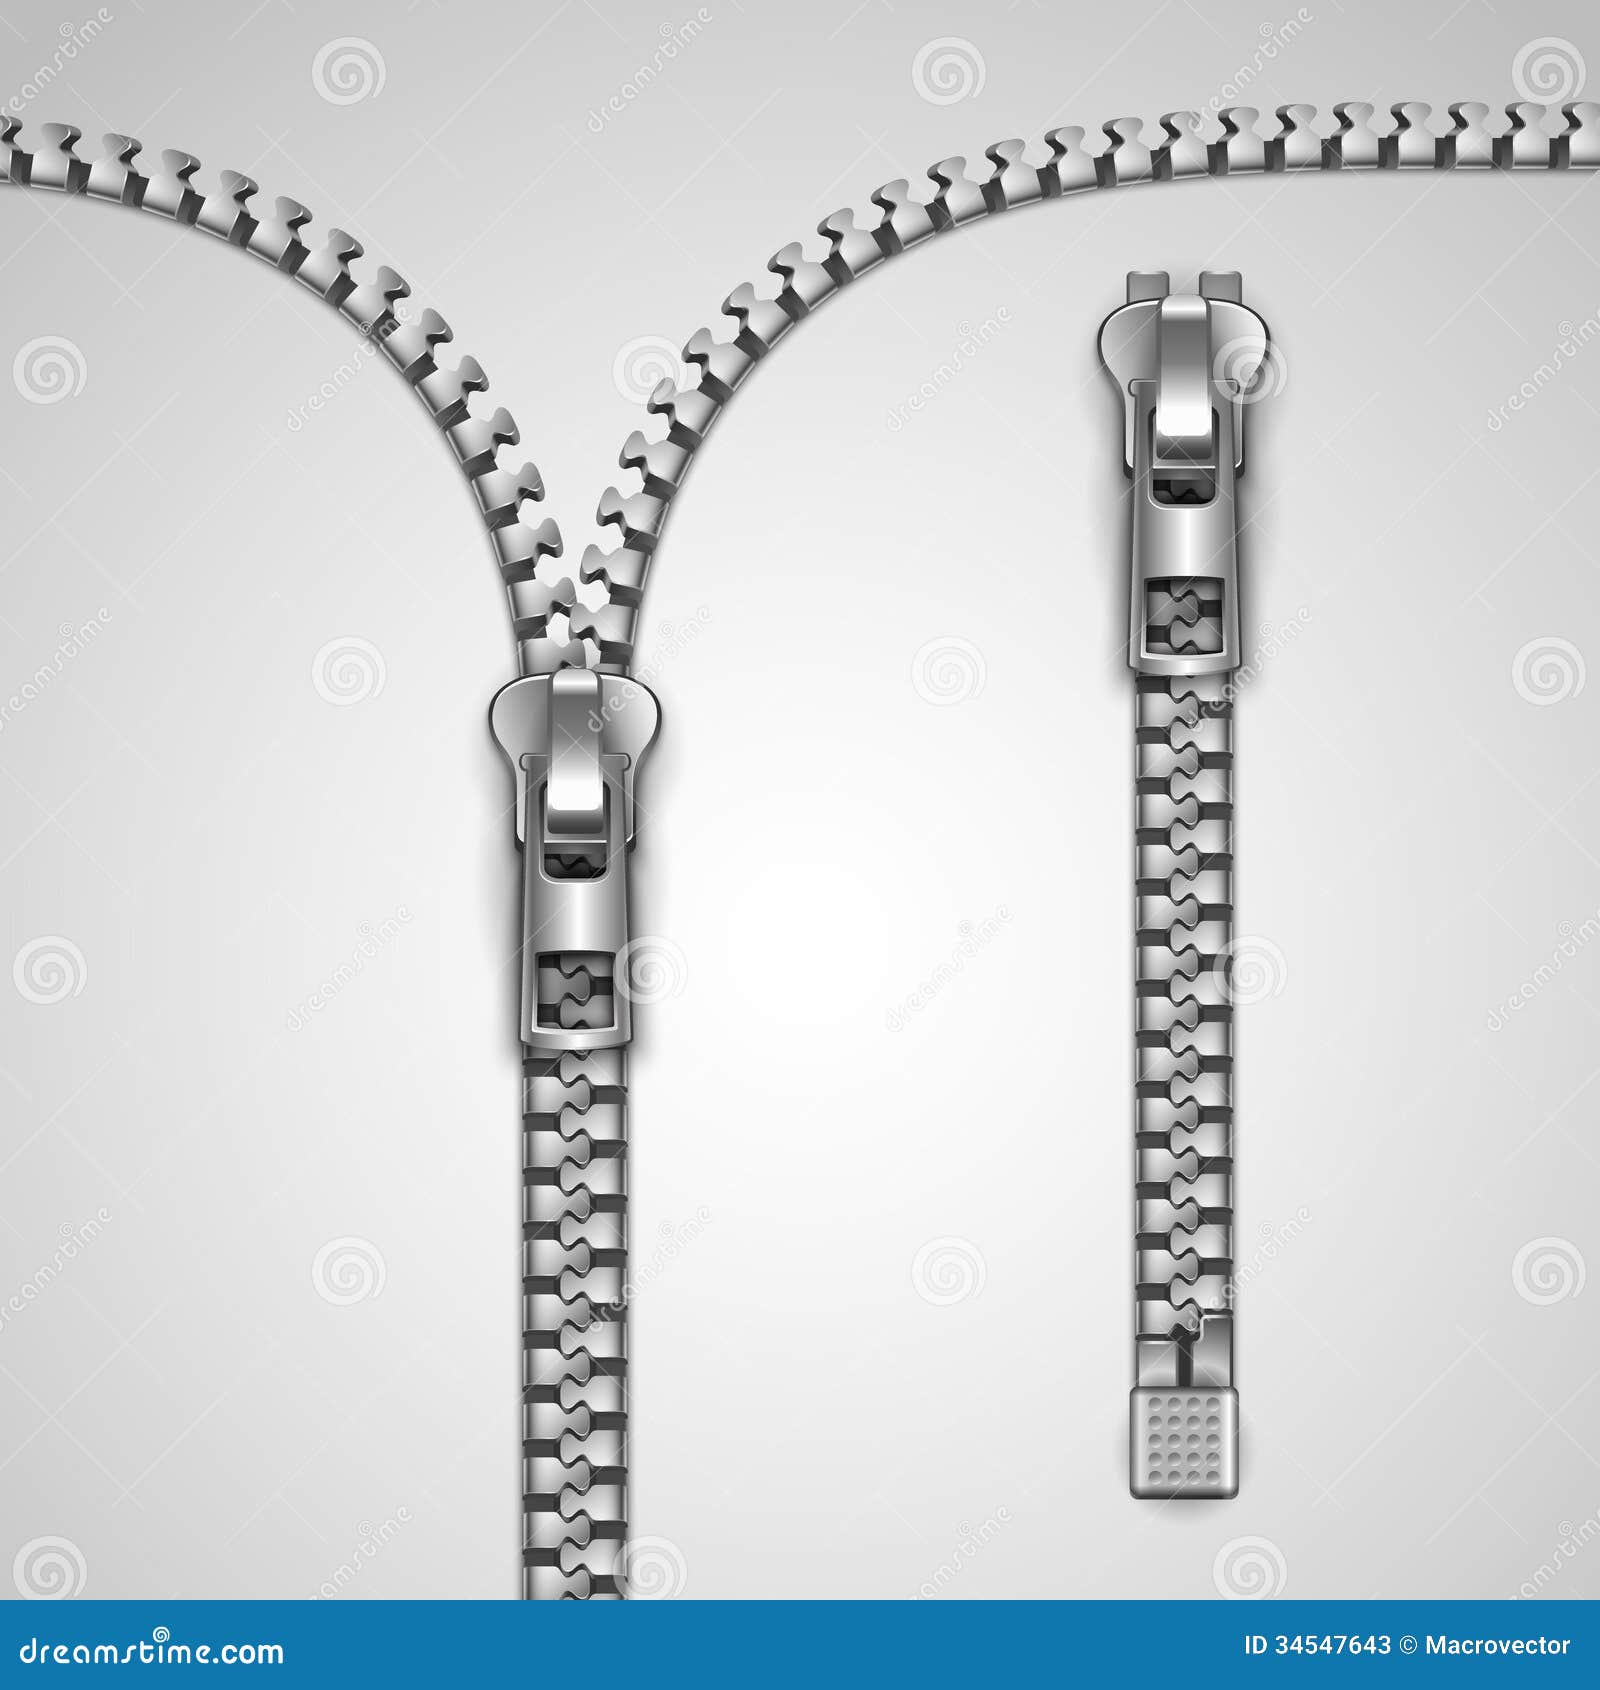 animated zipper clipart - photo #50